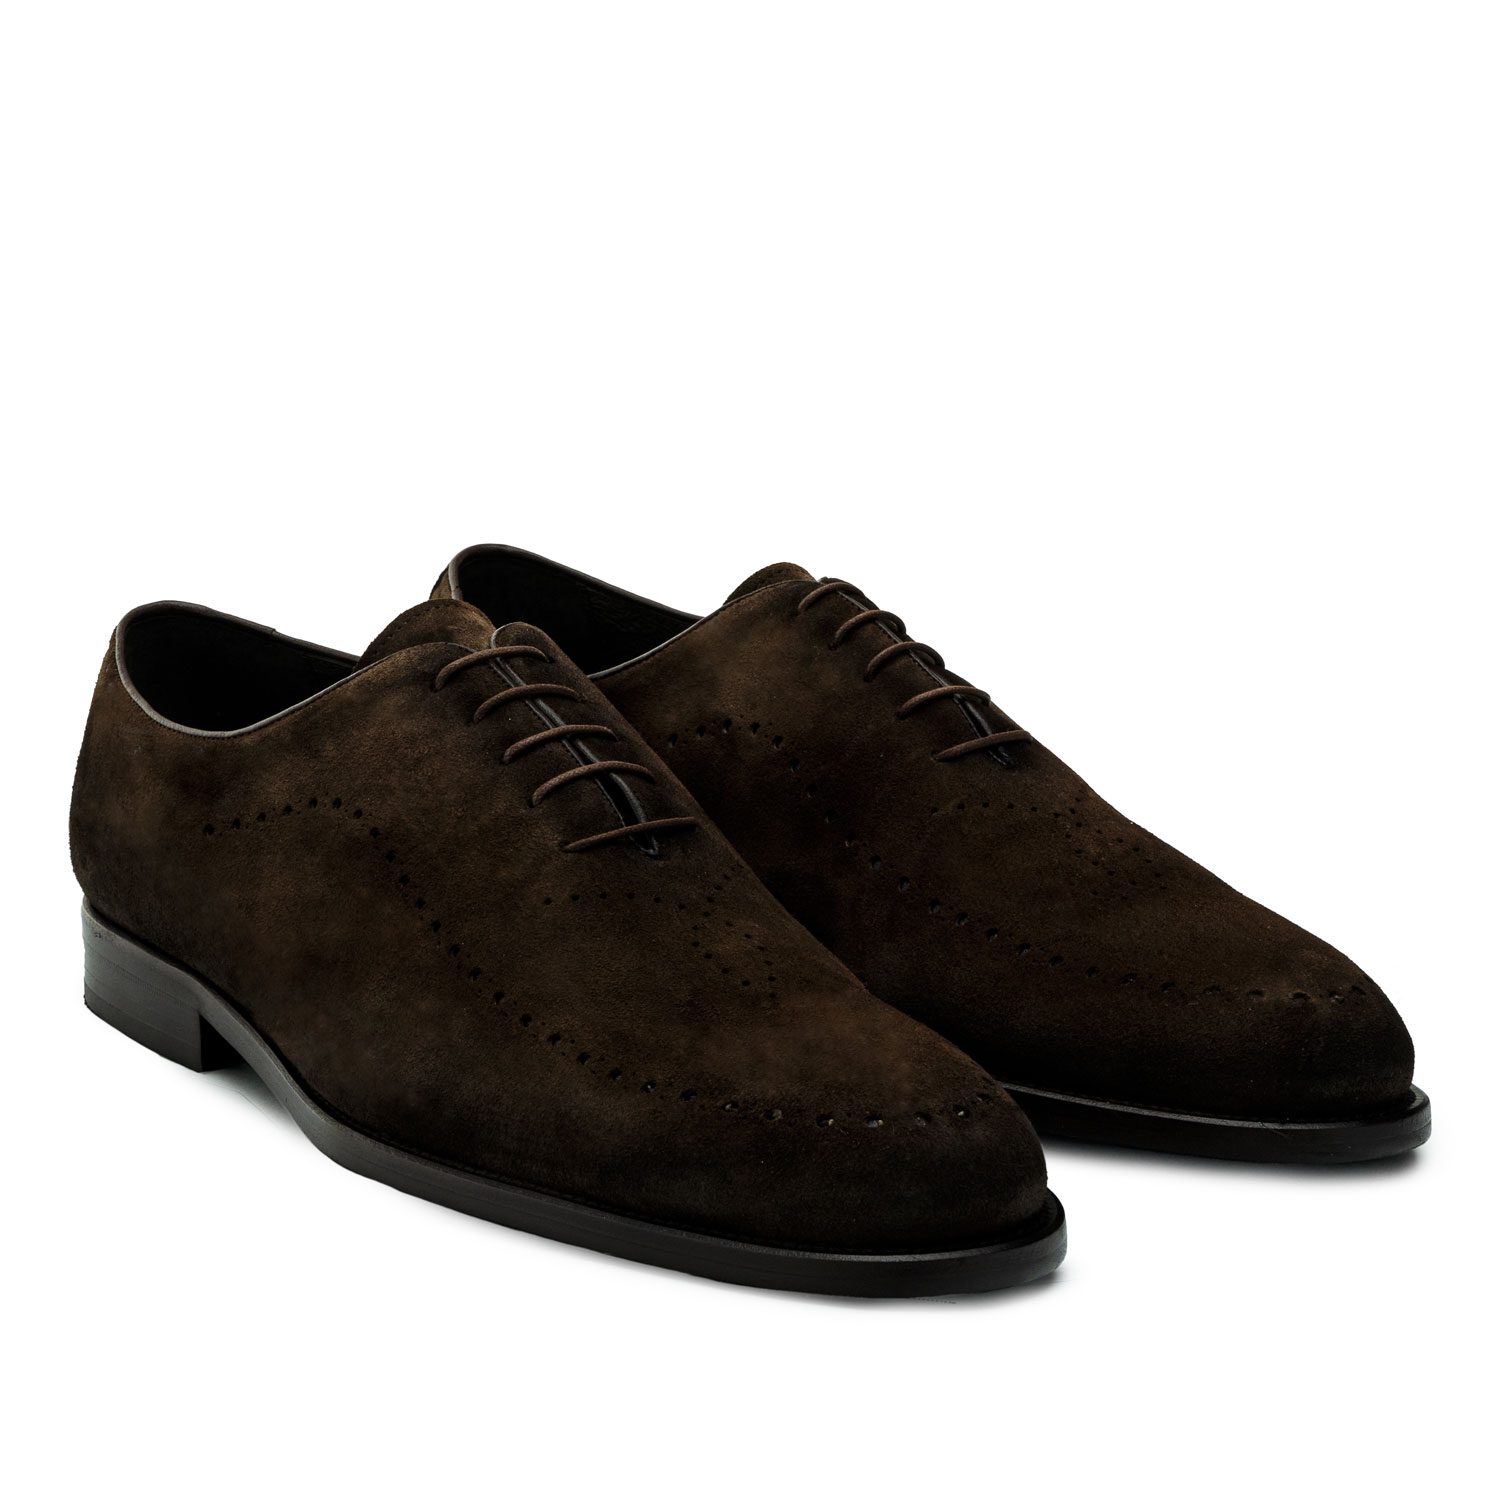 Men's Dress Shoes in Brown Split Leather 